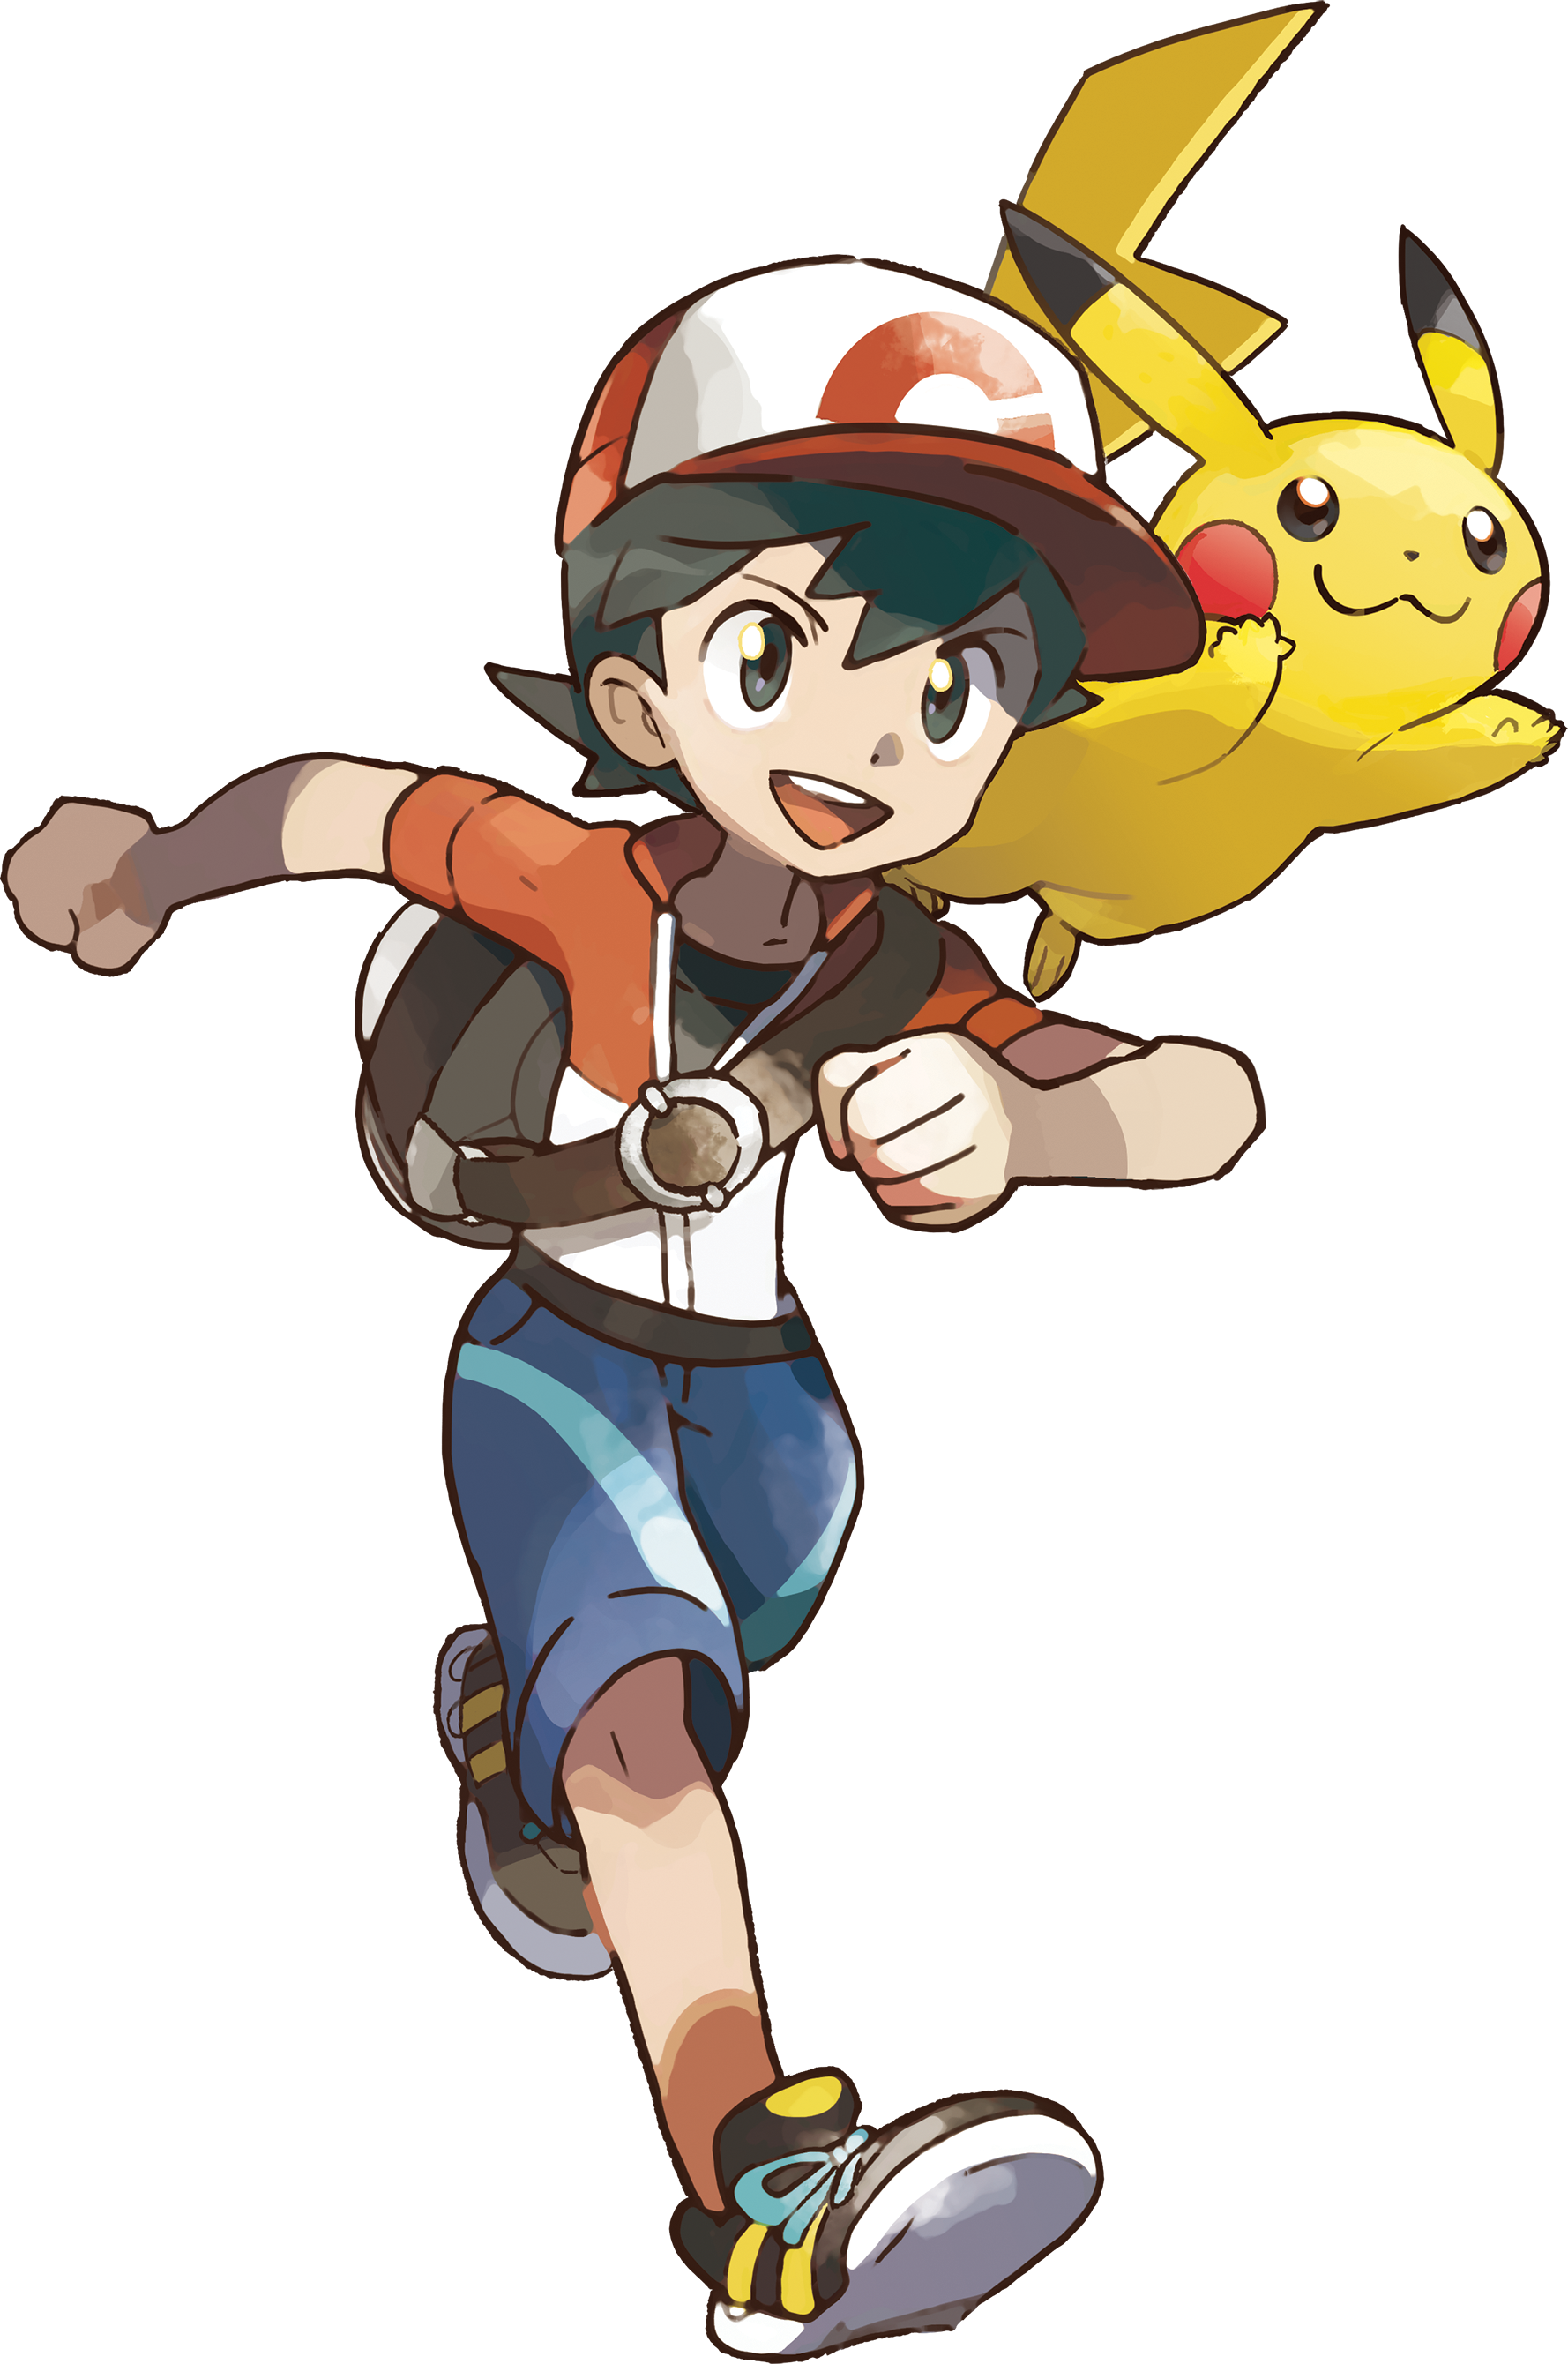 Ethan (game) - Bulbapedia, the community-driven Pokémon encyclopedia